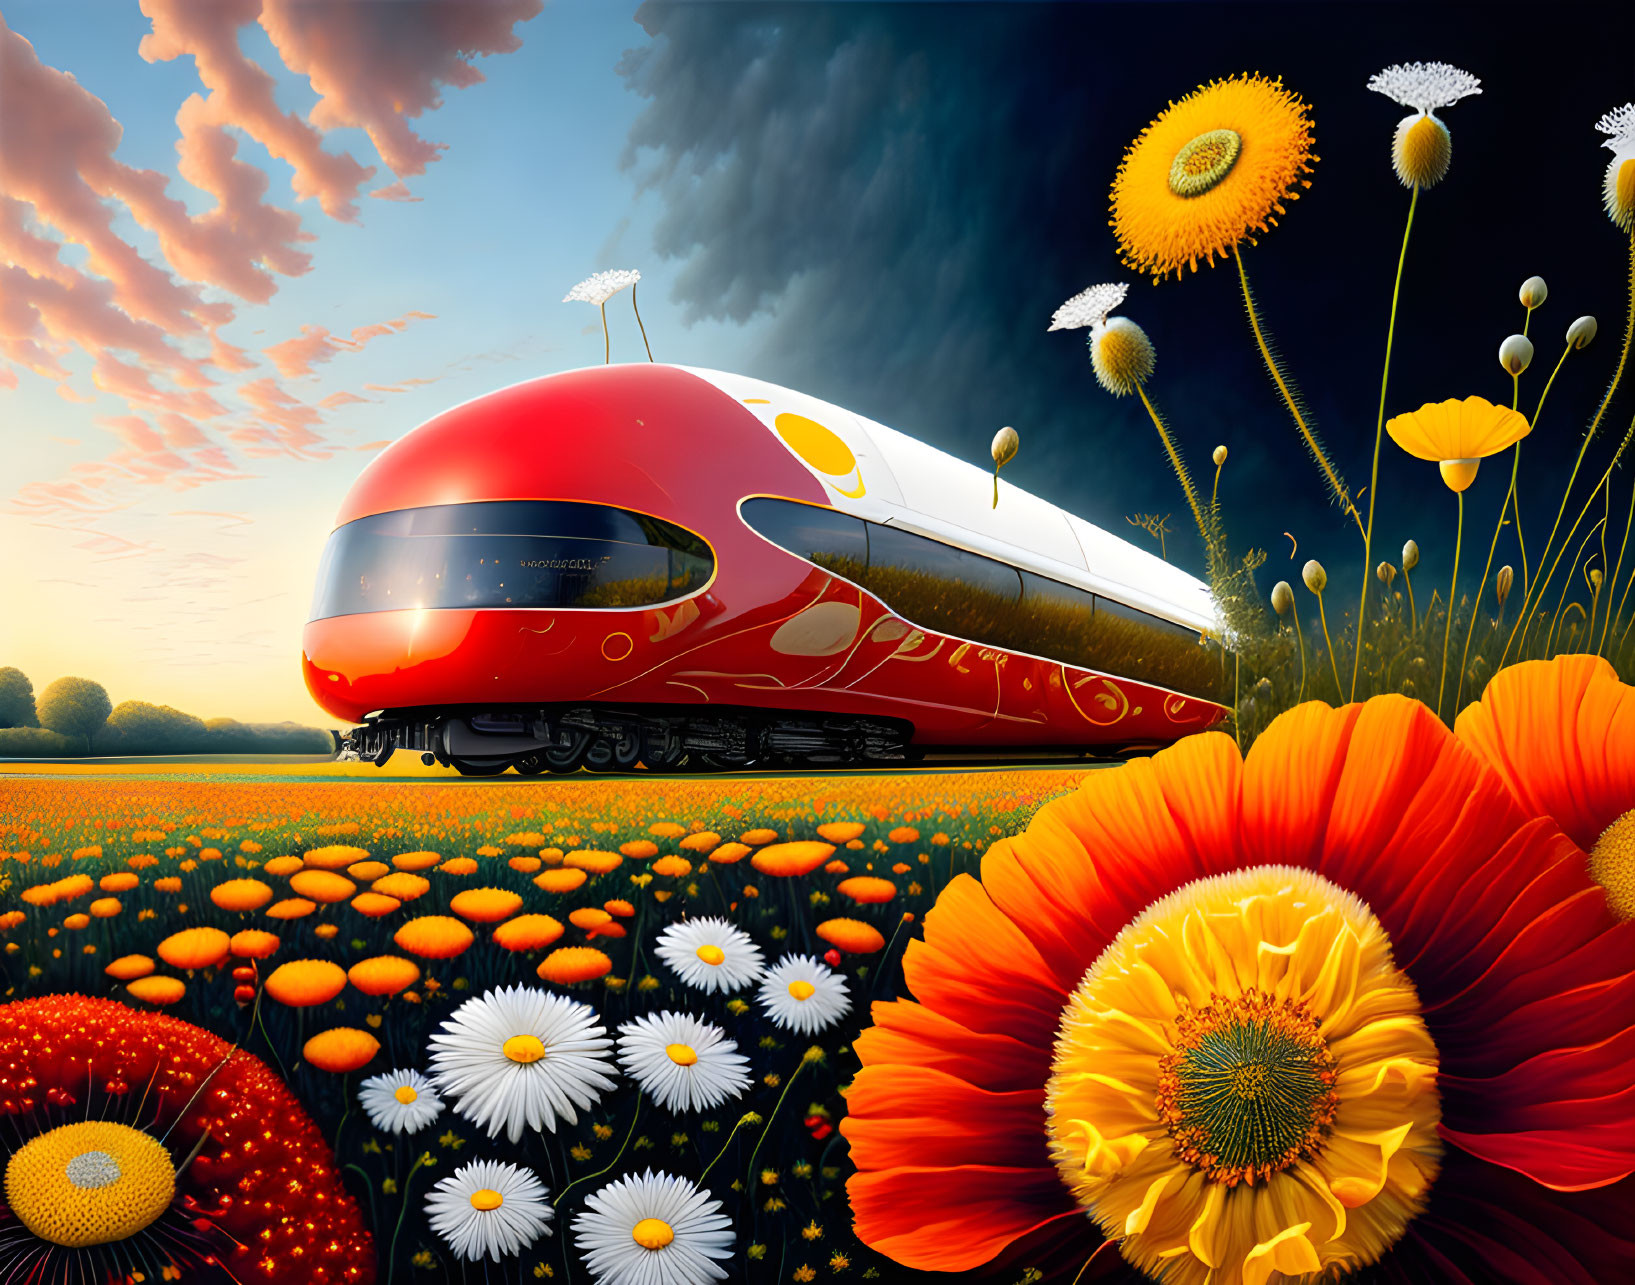 Red futuristic train in vibrant flower field under dramatic sky